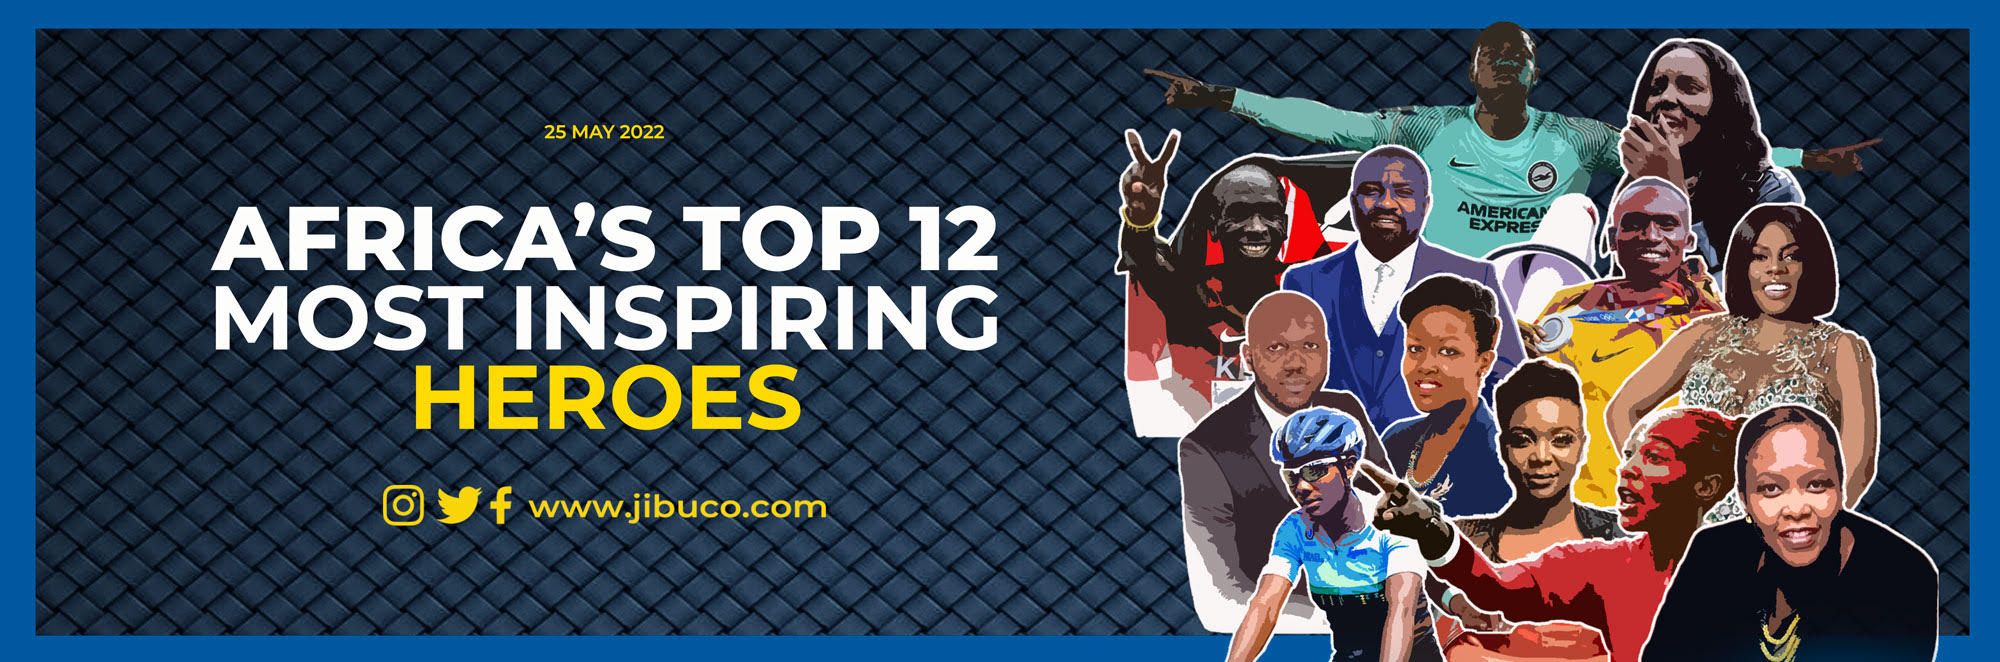 AFRICA’S TOP 12 MOST INSPIRING HEROES